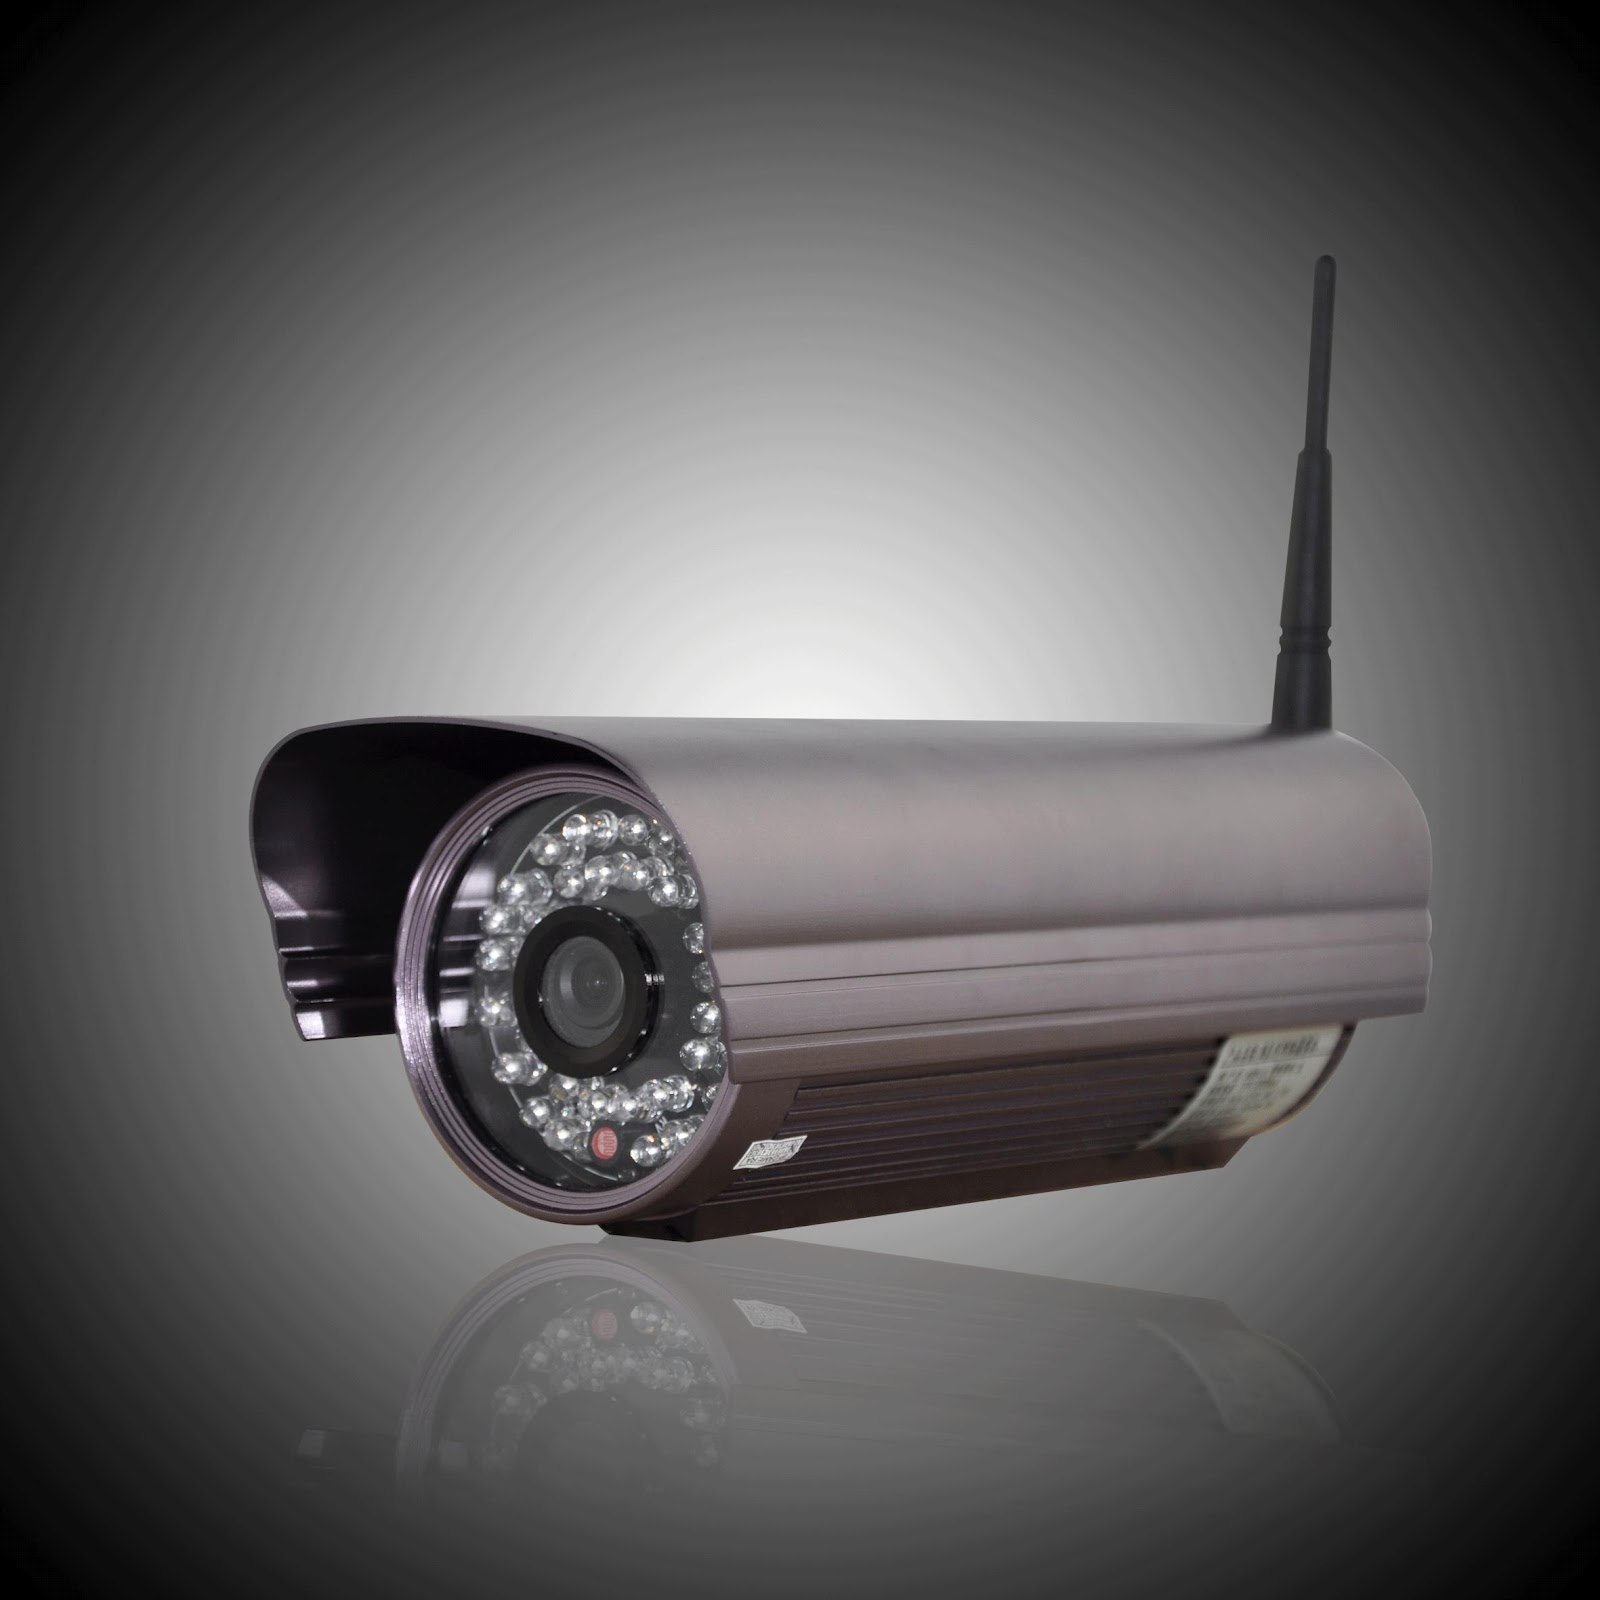 EverEye CCTV Camera Security Surveillance